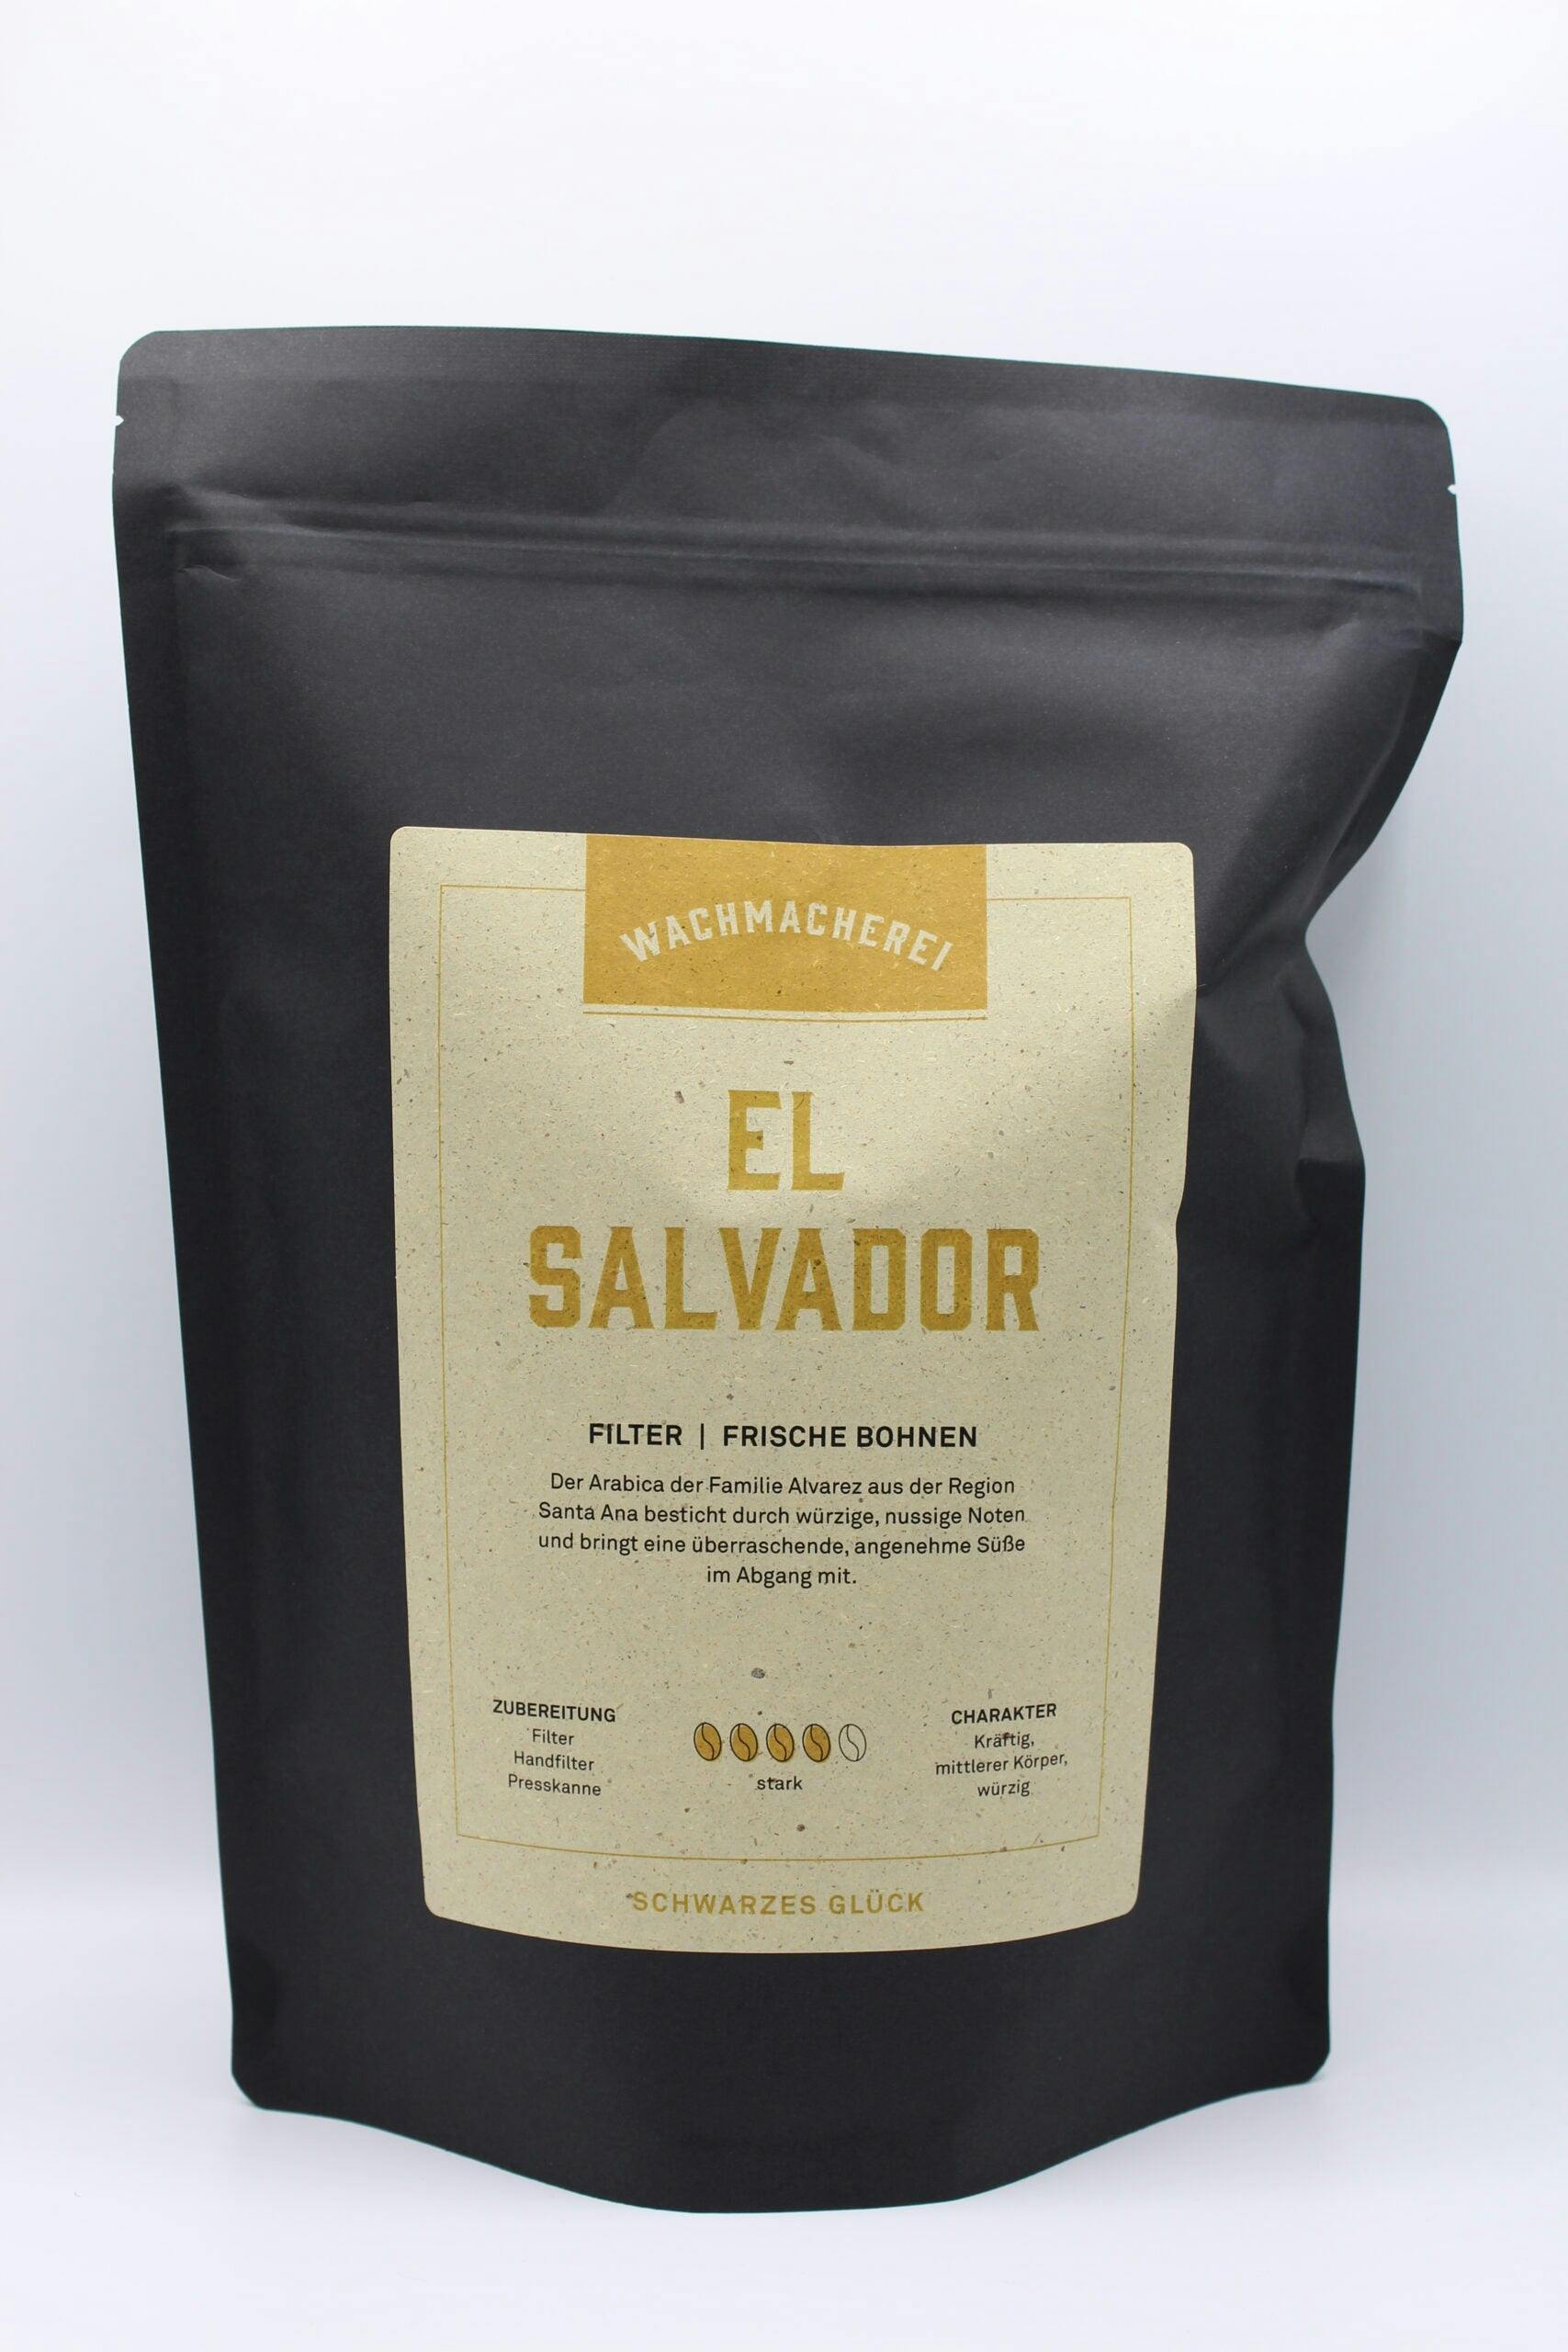 El Salvador - EL_Salvador_1000g-scaled